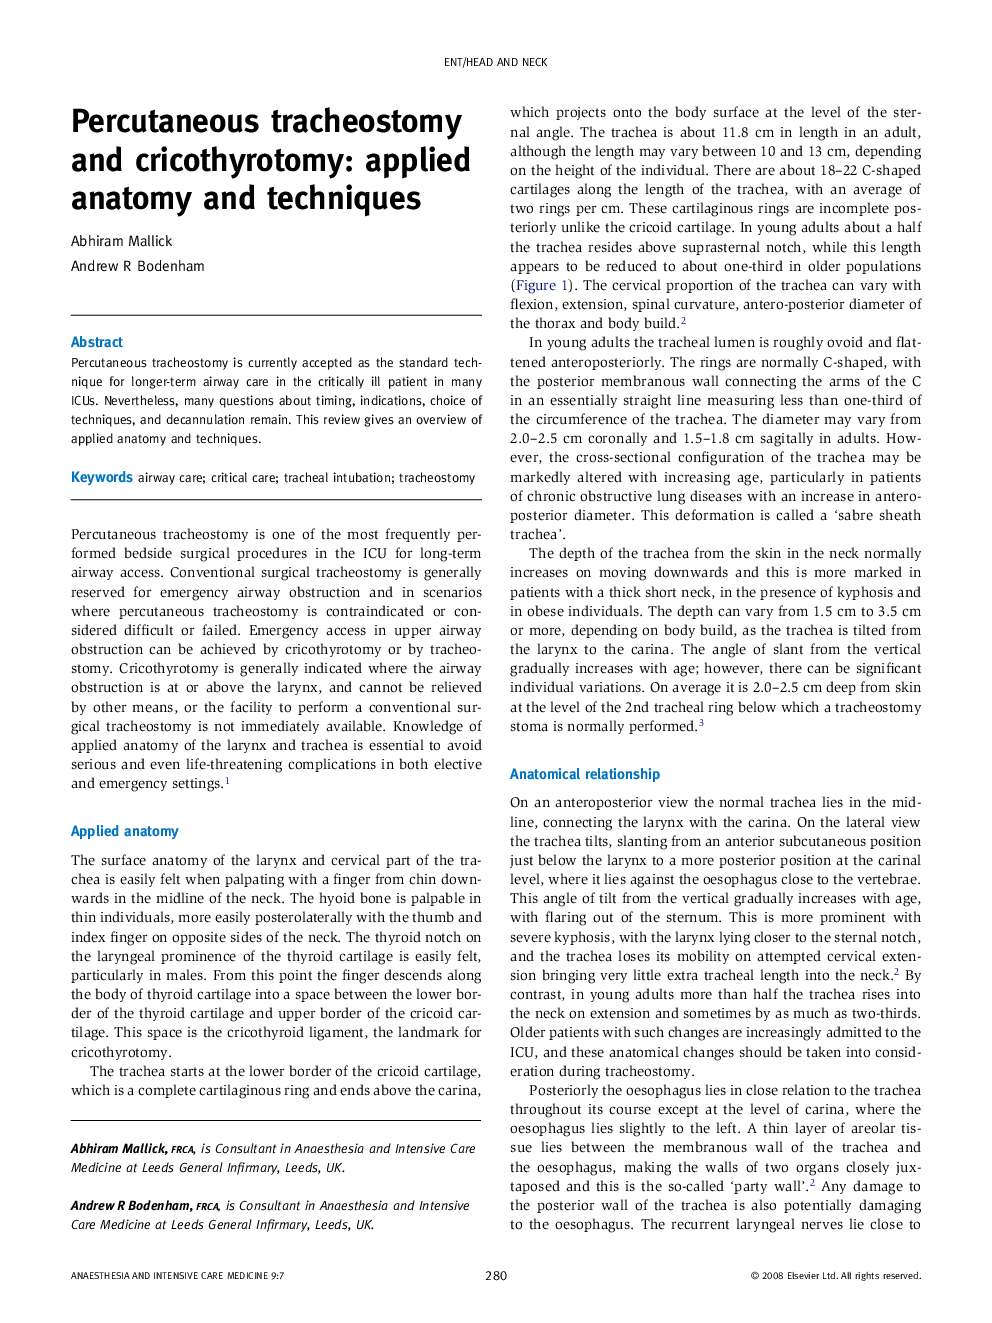 Percutaneous tracheostomy and cricothyrotomy: applied anatomy and techniques